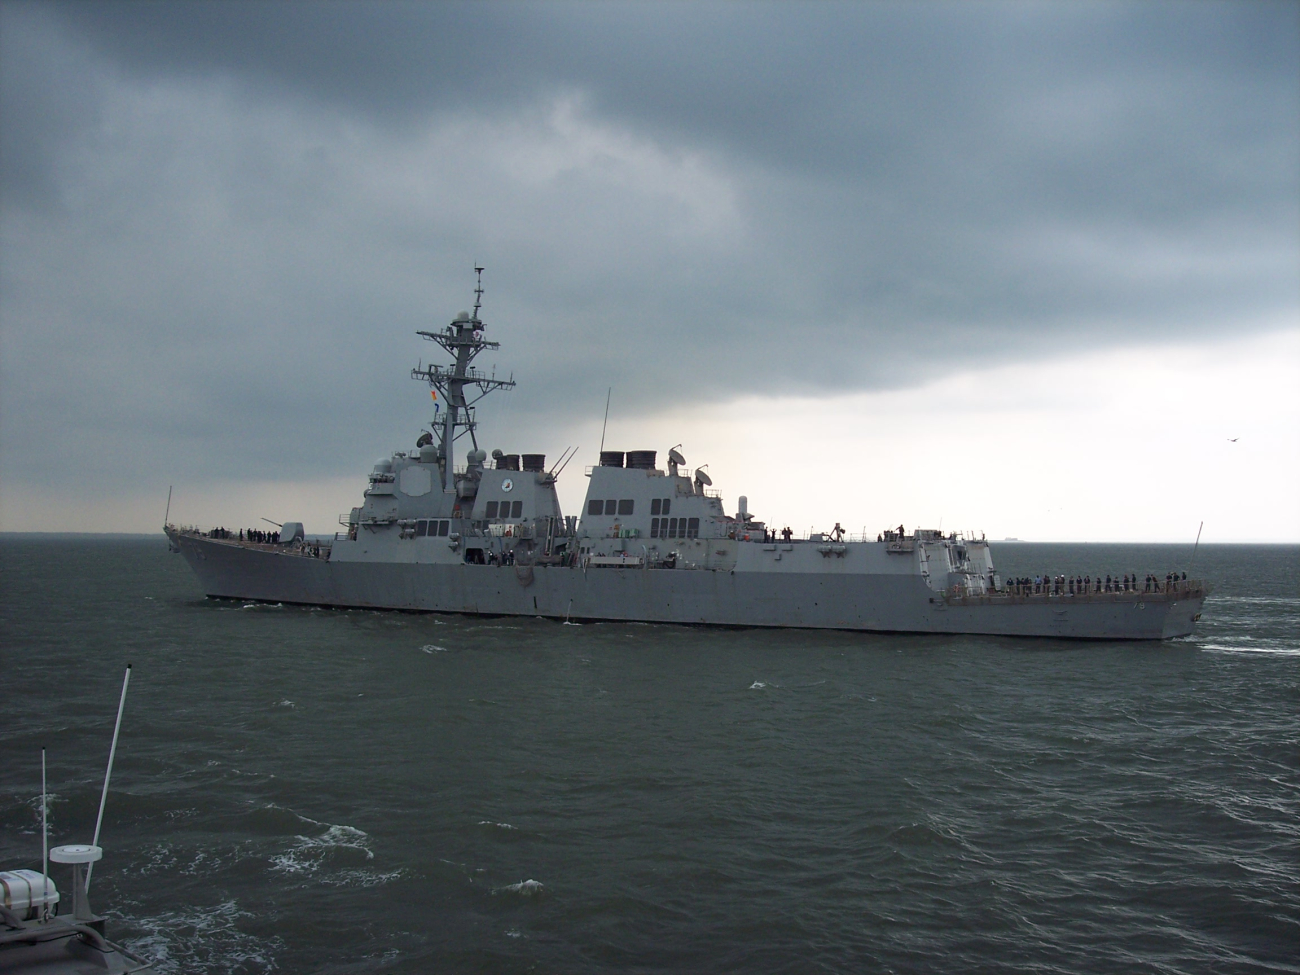 USS OSCAR AUSTIN DDG 79, an Aegis guided missile destroyer in HamptonRoads area